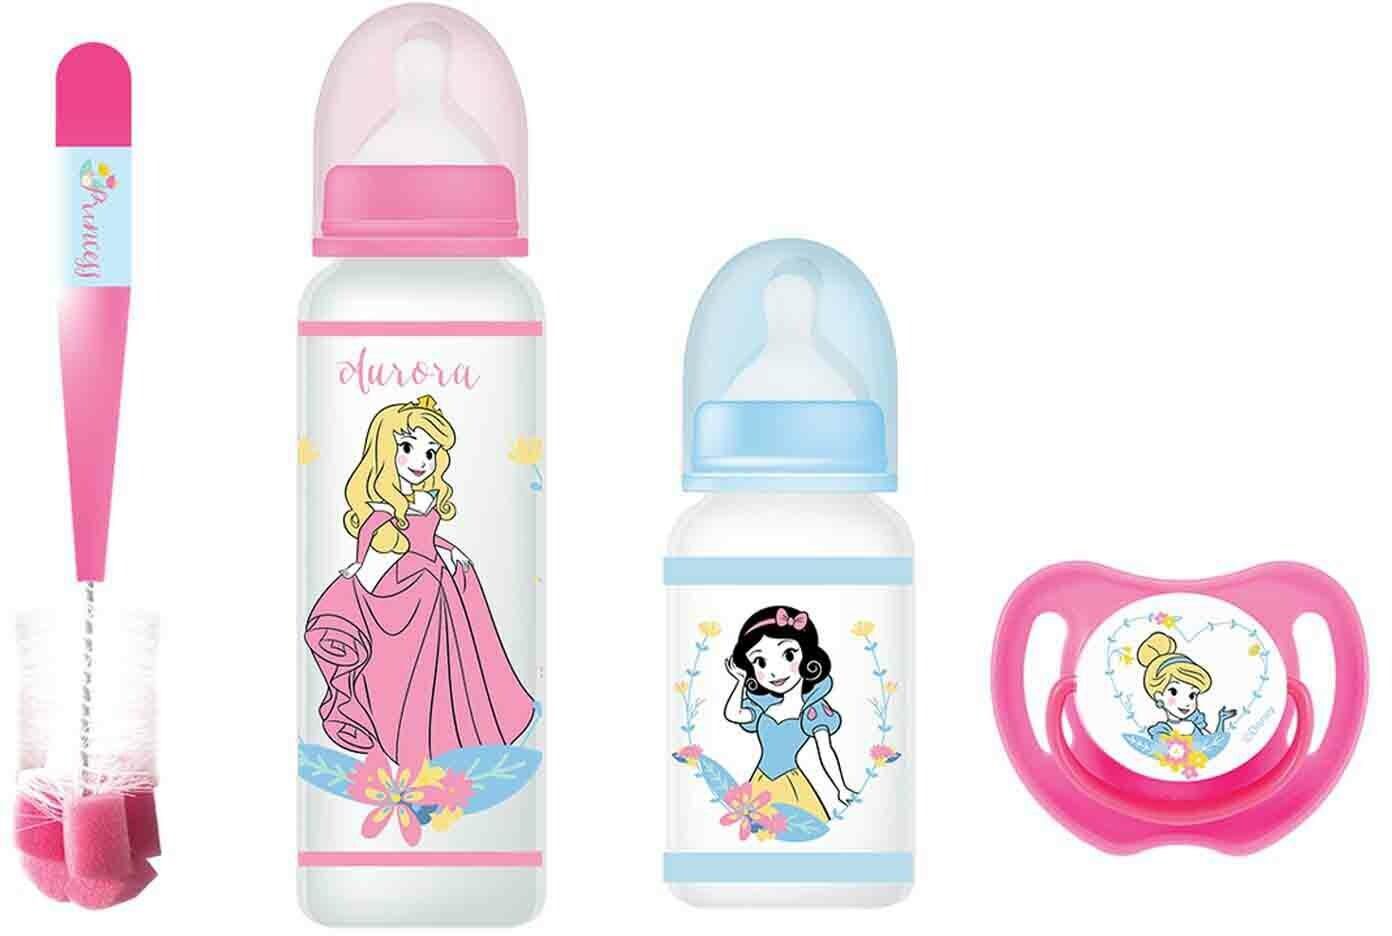 Disney Princess Gift Set TRHA1729 Multicolour Pack of 4